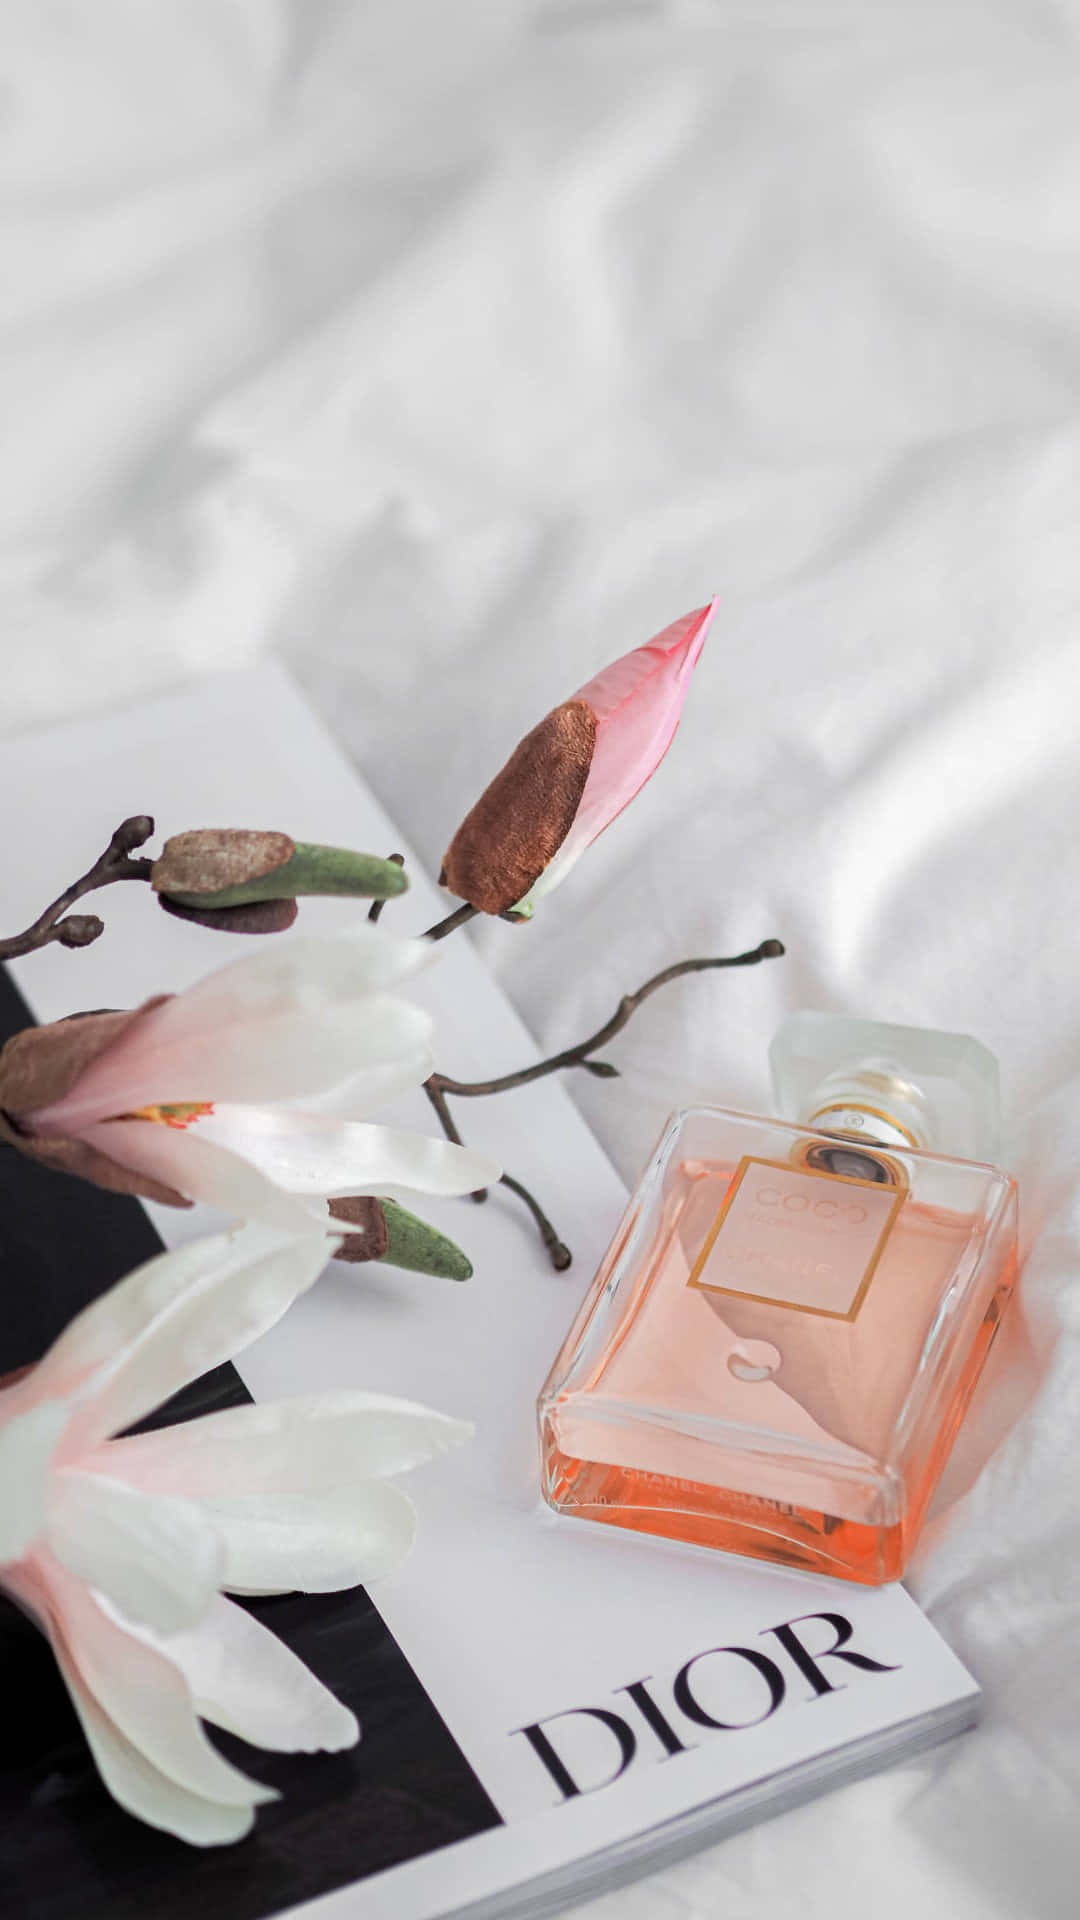 Elegant Dior Perfume Bottle Floral Arrangement Wallpaper